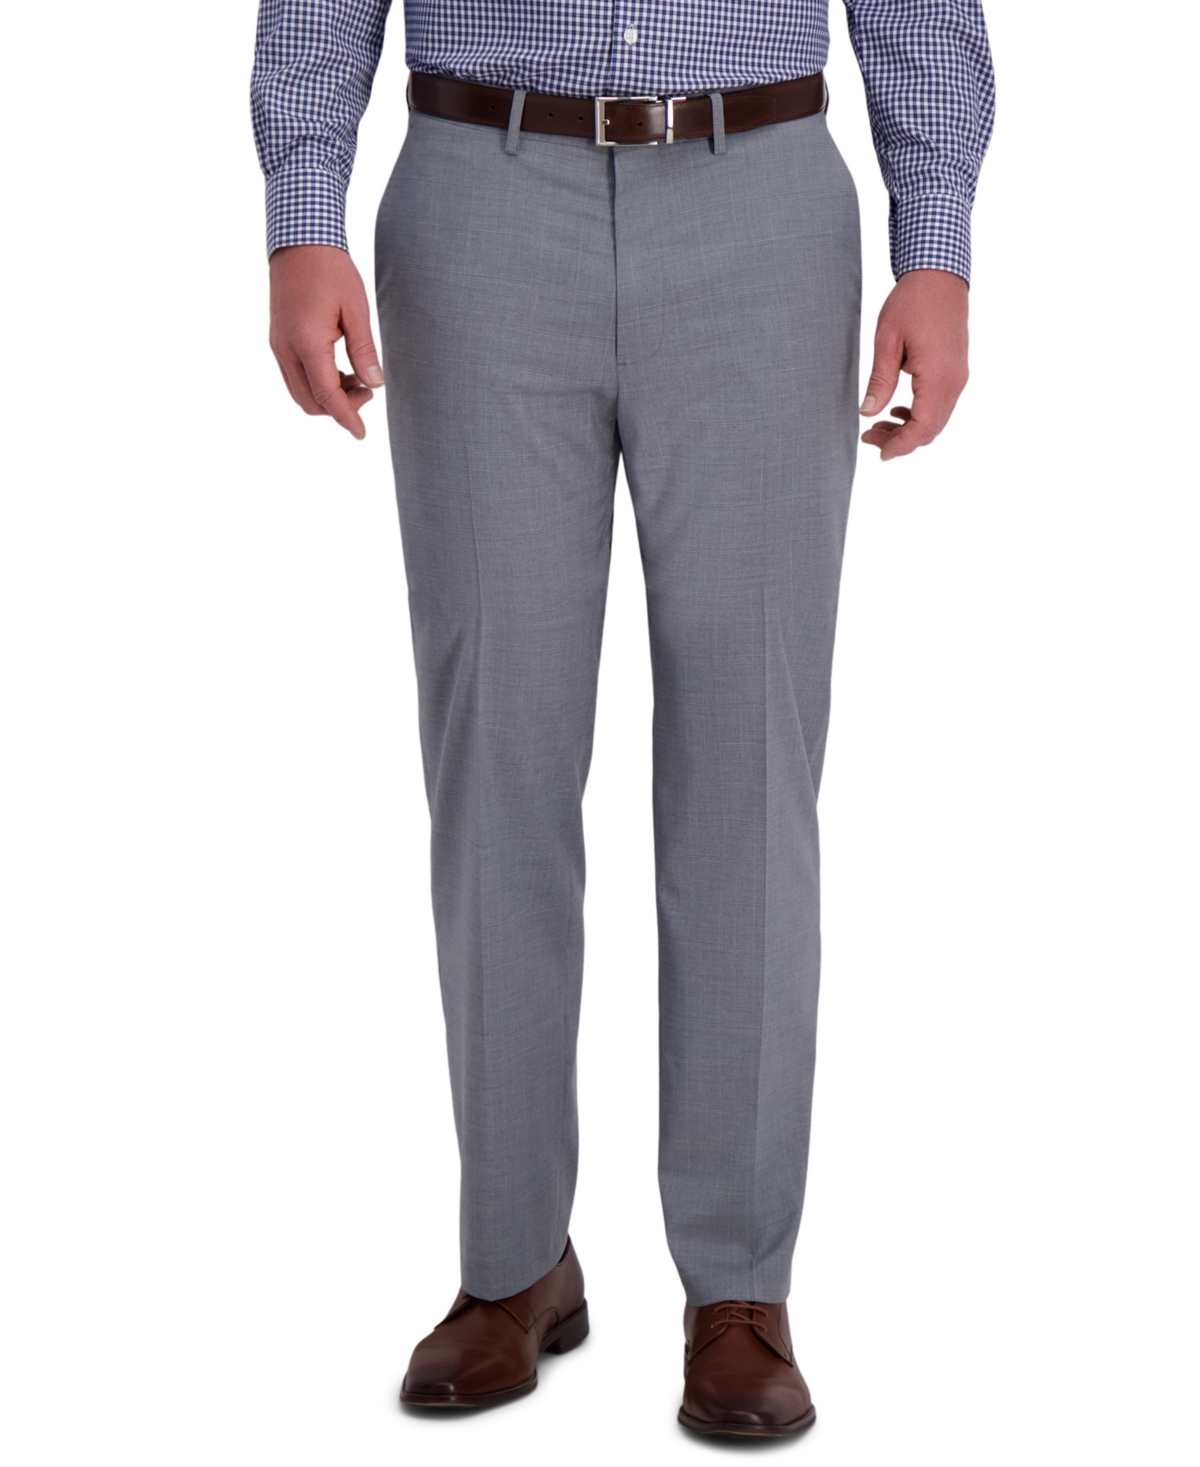 J.m. Haggar Men's Classic-Fit 4-Way Stretch Textured Plaid Performance Dress Pants - Grey